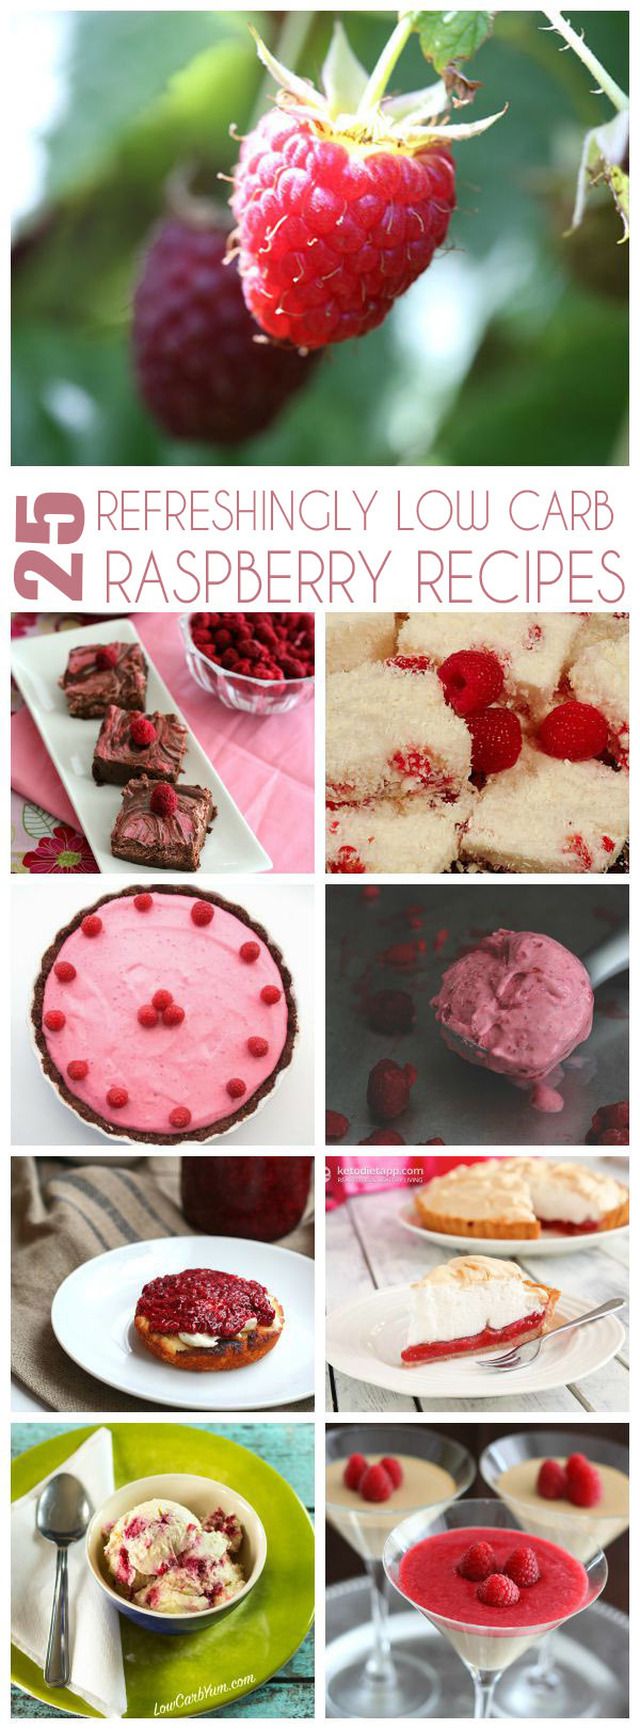 25 Refreshing Low Carb Raspberry Recipes